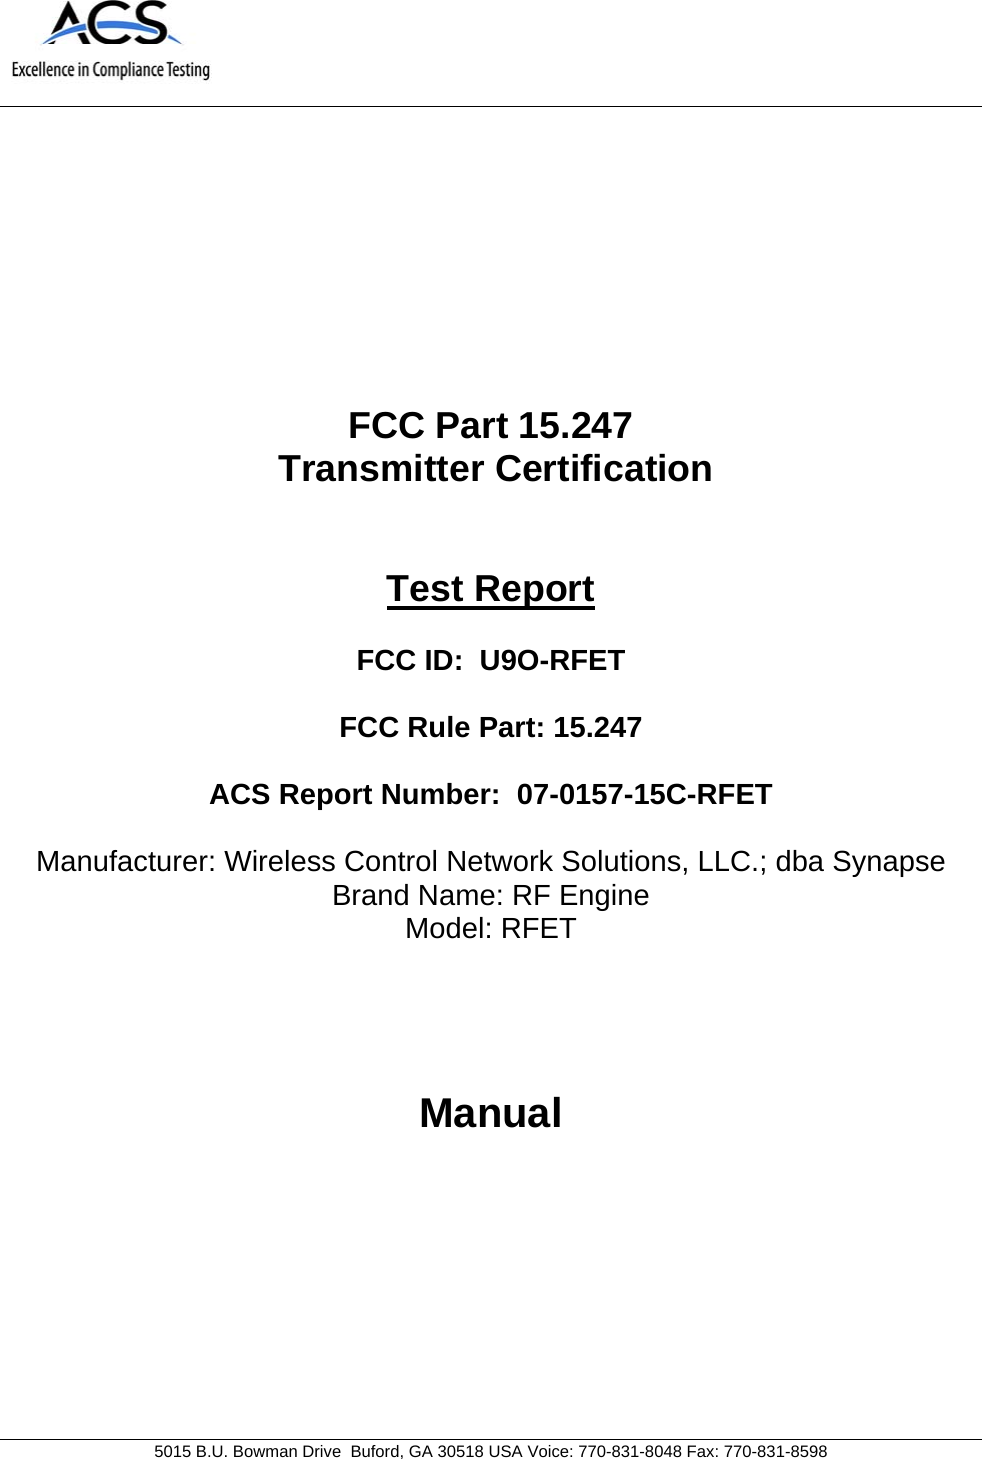   5015 B.U. Bowman Drive  Buford, GA 30518 USA Voice: 770-831-8048 Fax: 770-831-8598   FCC Part 15.247  Transmitter Certification   Test Report  FCC ID:  U9O-RFET  FCC Rule Part: 15.247  ACS Report Number:  07-0157-15C-RFET   Manufacturer: Wireless Control Network Solutions, LLC.; dba Synapse Brand Name: RF Engine  Model: RFET    Manual 